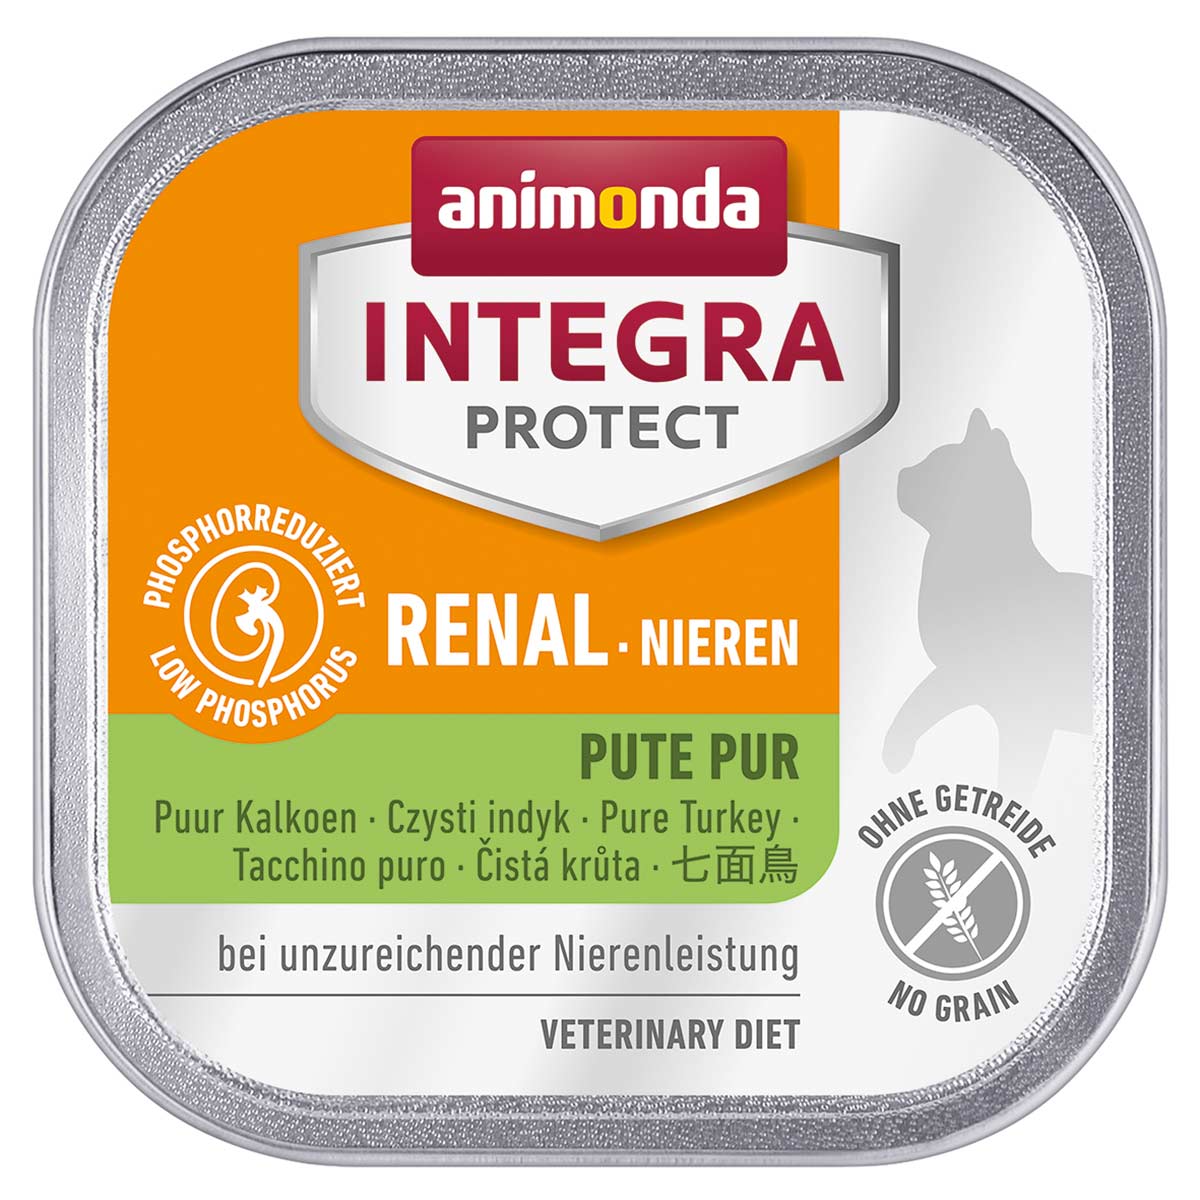 animonda INTEGRA PROTECT Renal Pute pur 16x100g von animonda Integra Protect